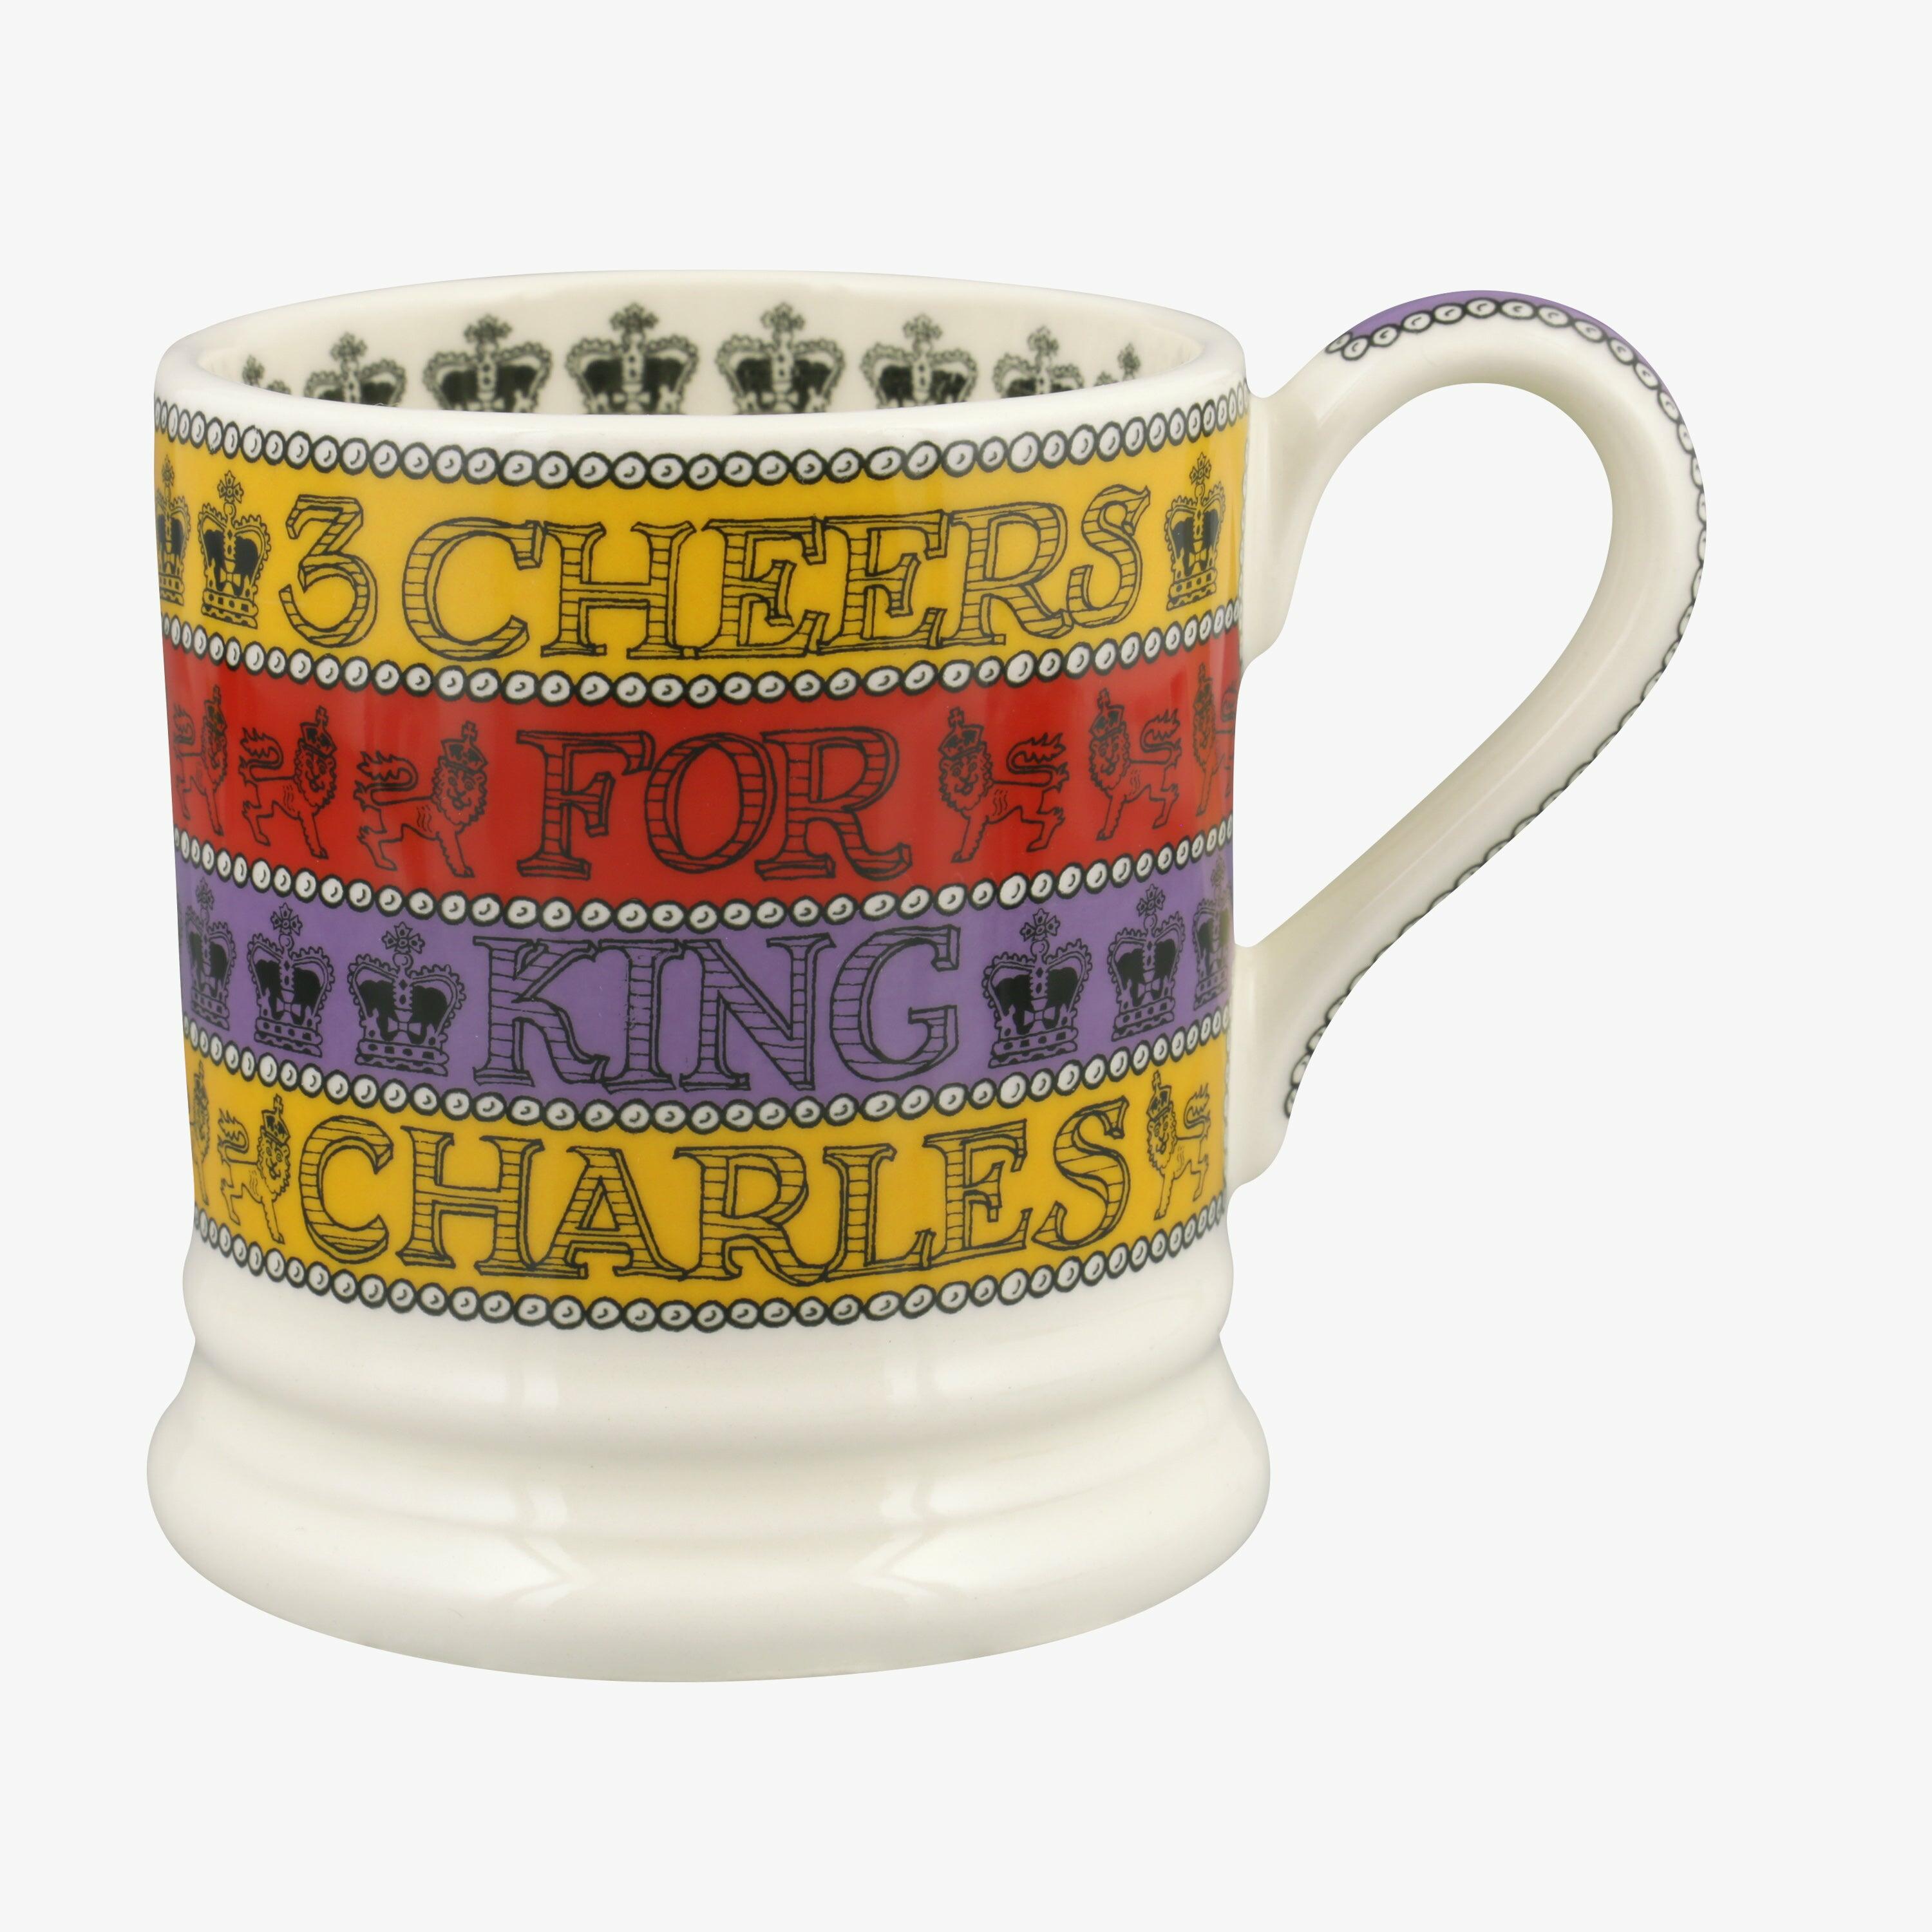 Emma Bridgewater  Seconds 3 Cheers For King Charles III 1/2 Pint Mug - Unique Handmade & Handpainted English Earthenware Tea/Coffee Mug